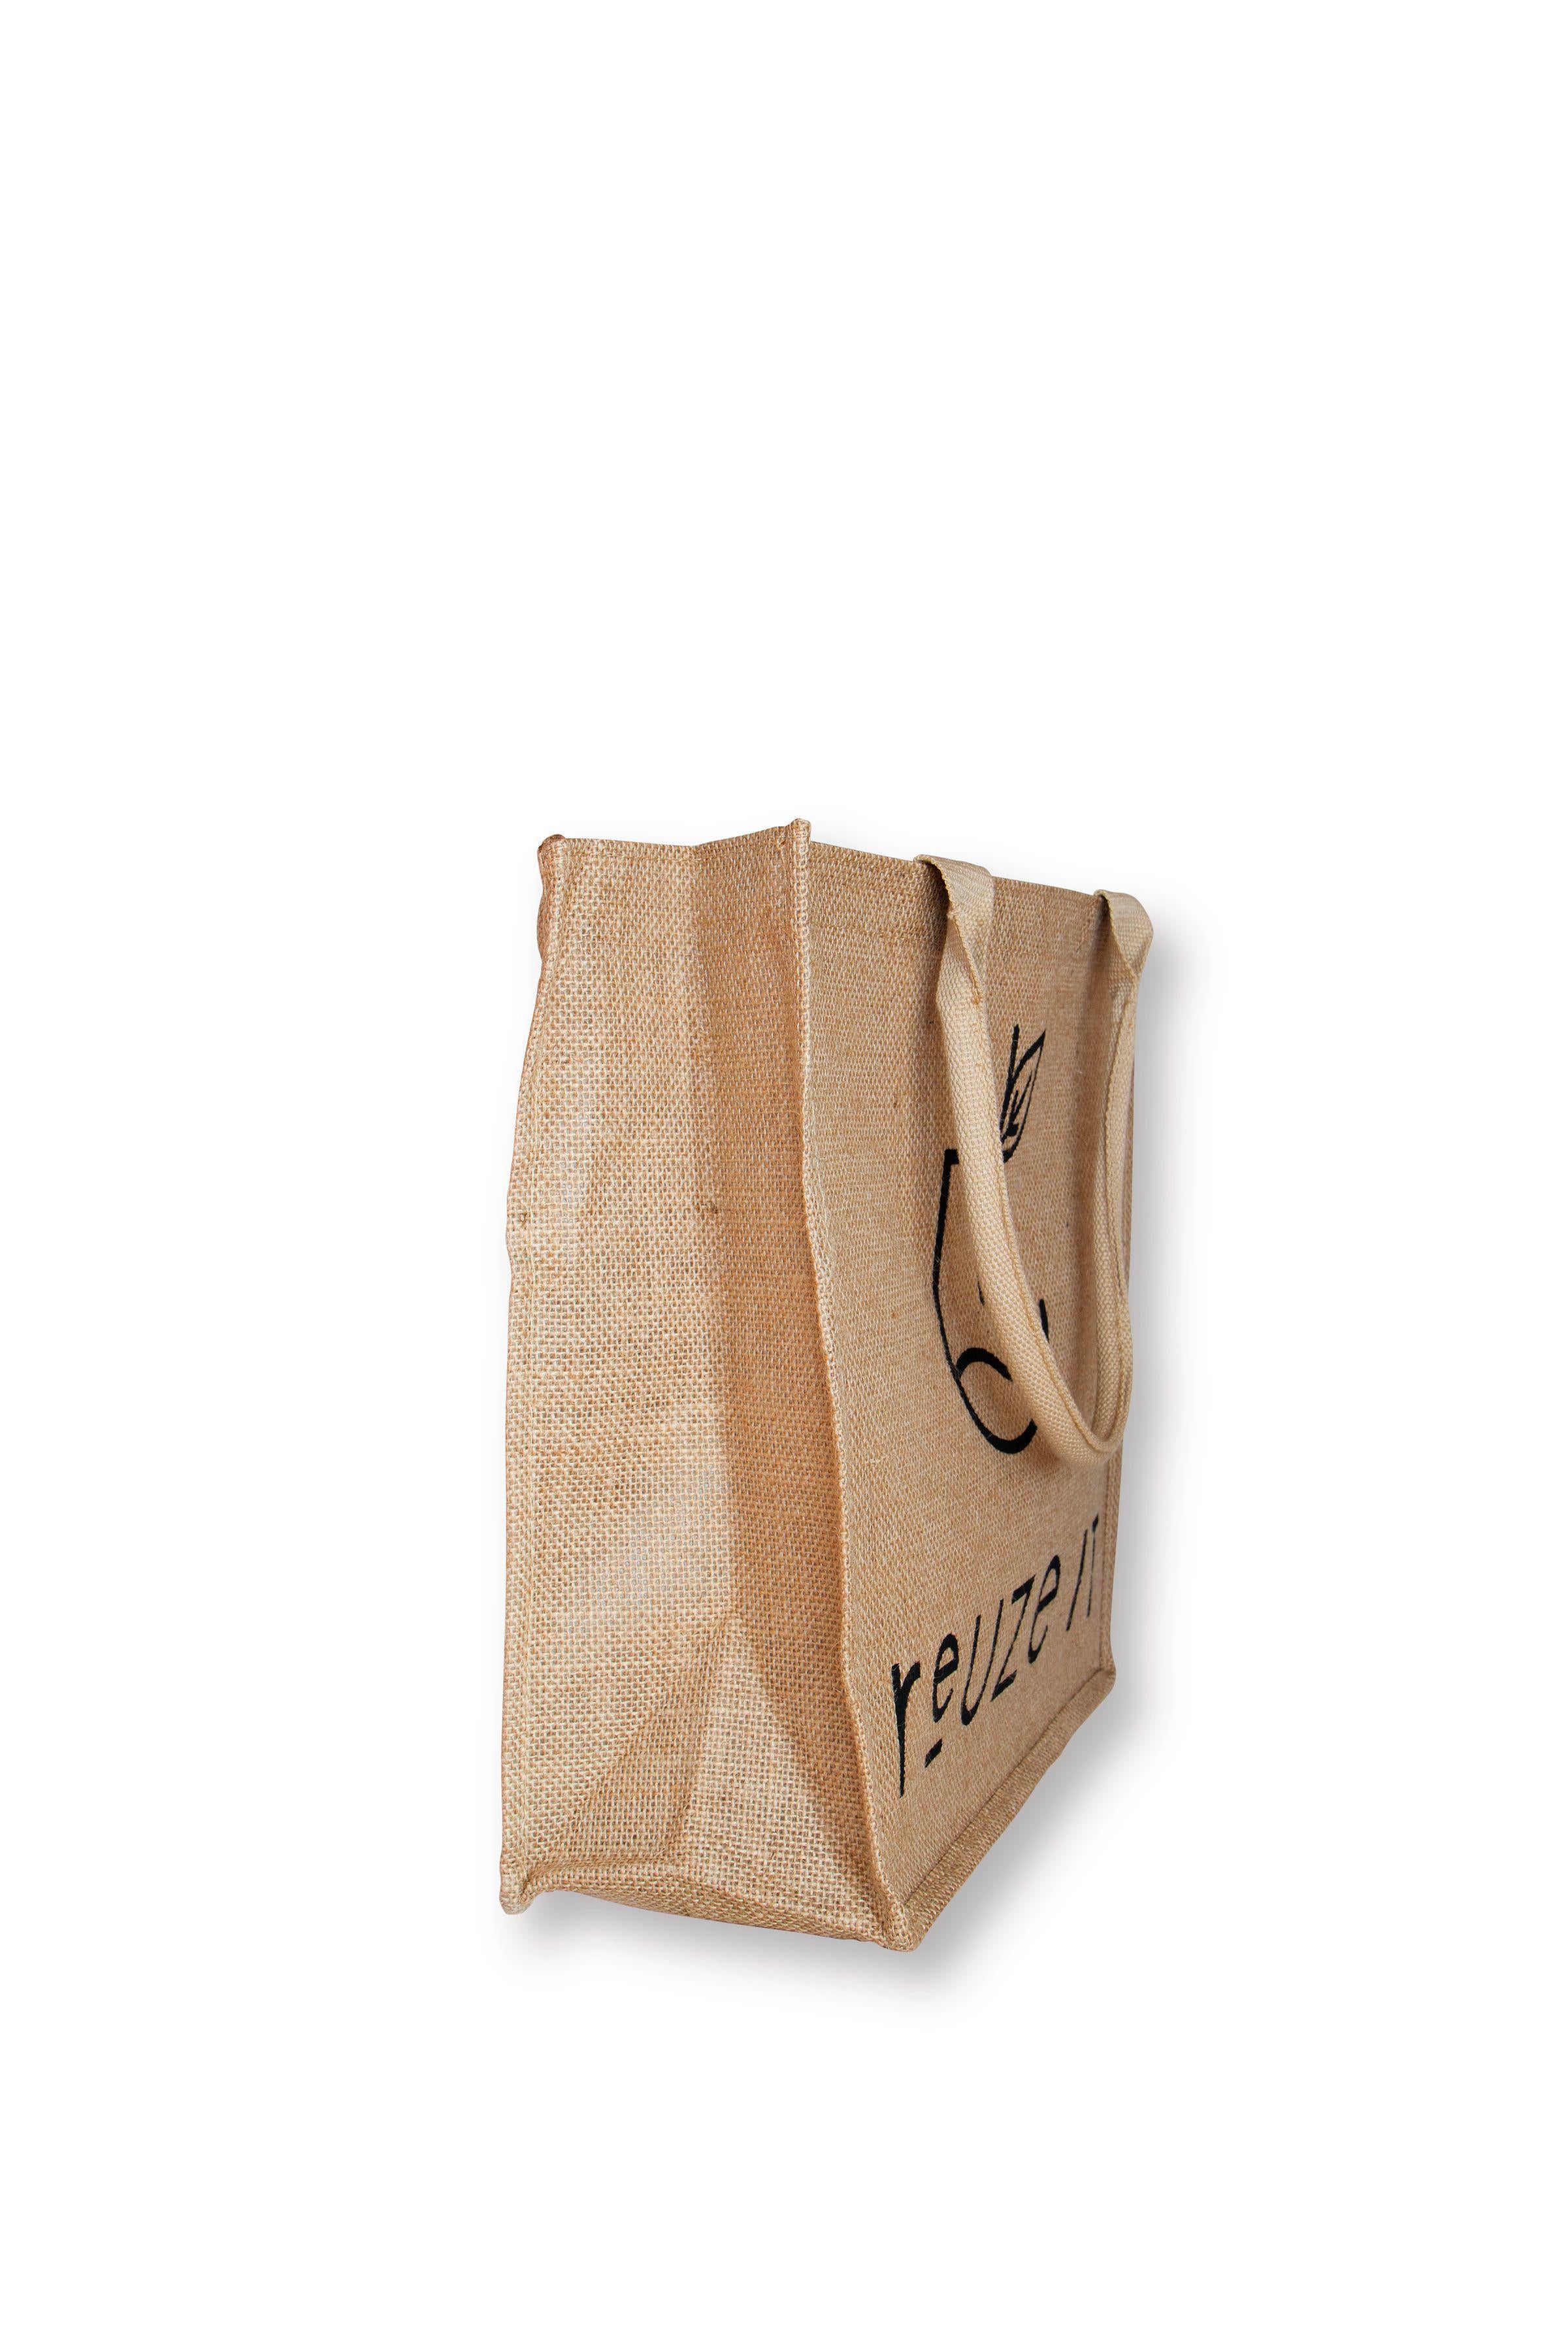 Jute Shopping Bag - 4pk | Shopping Bag | Reuze It | Eco Store | Eco Friendly Products